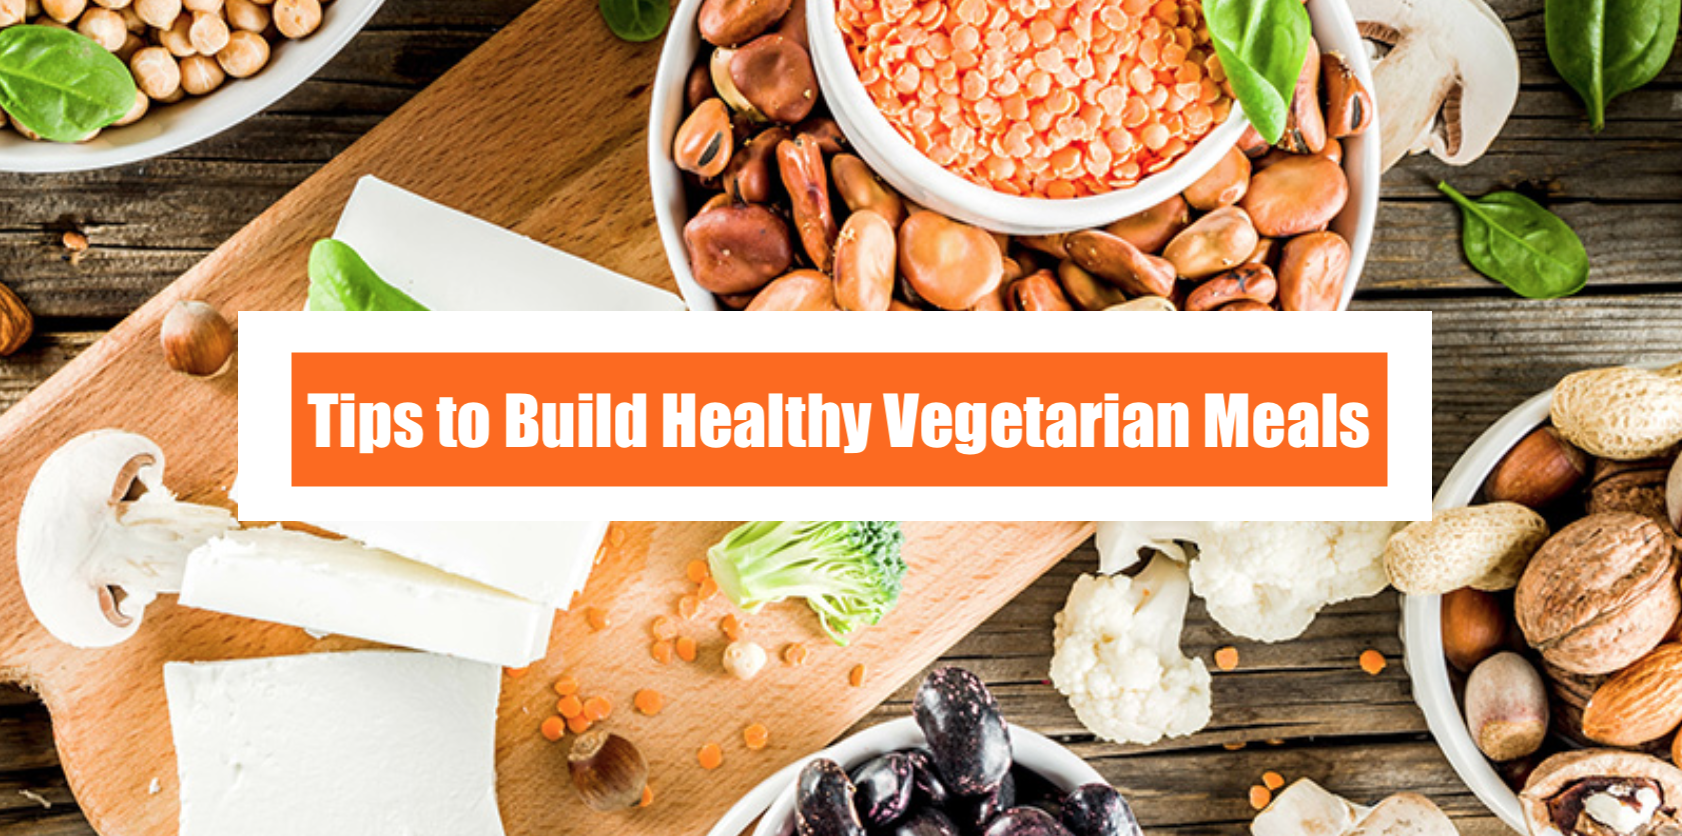 Tips to Build Healthy Vegetarian Meals